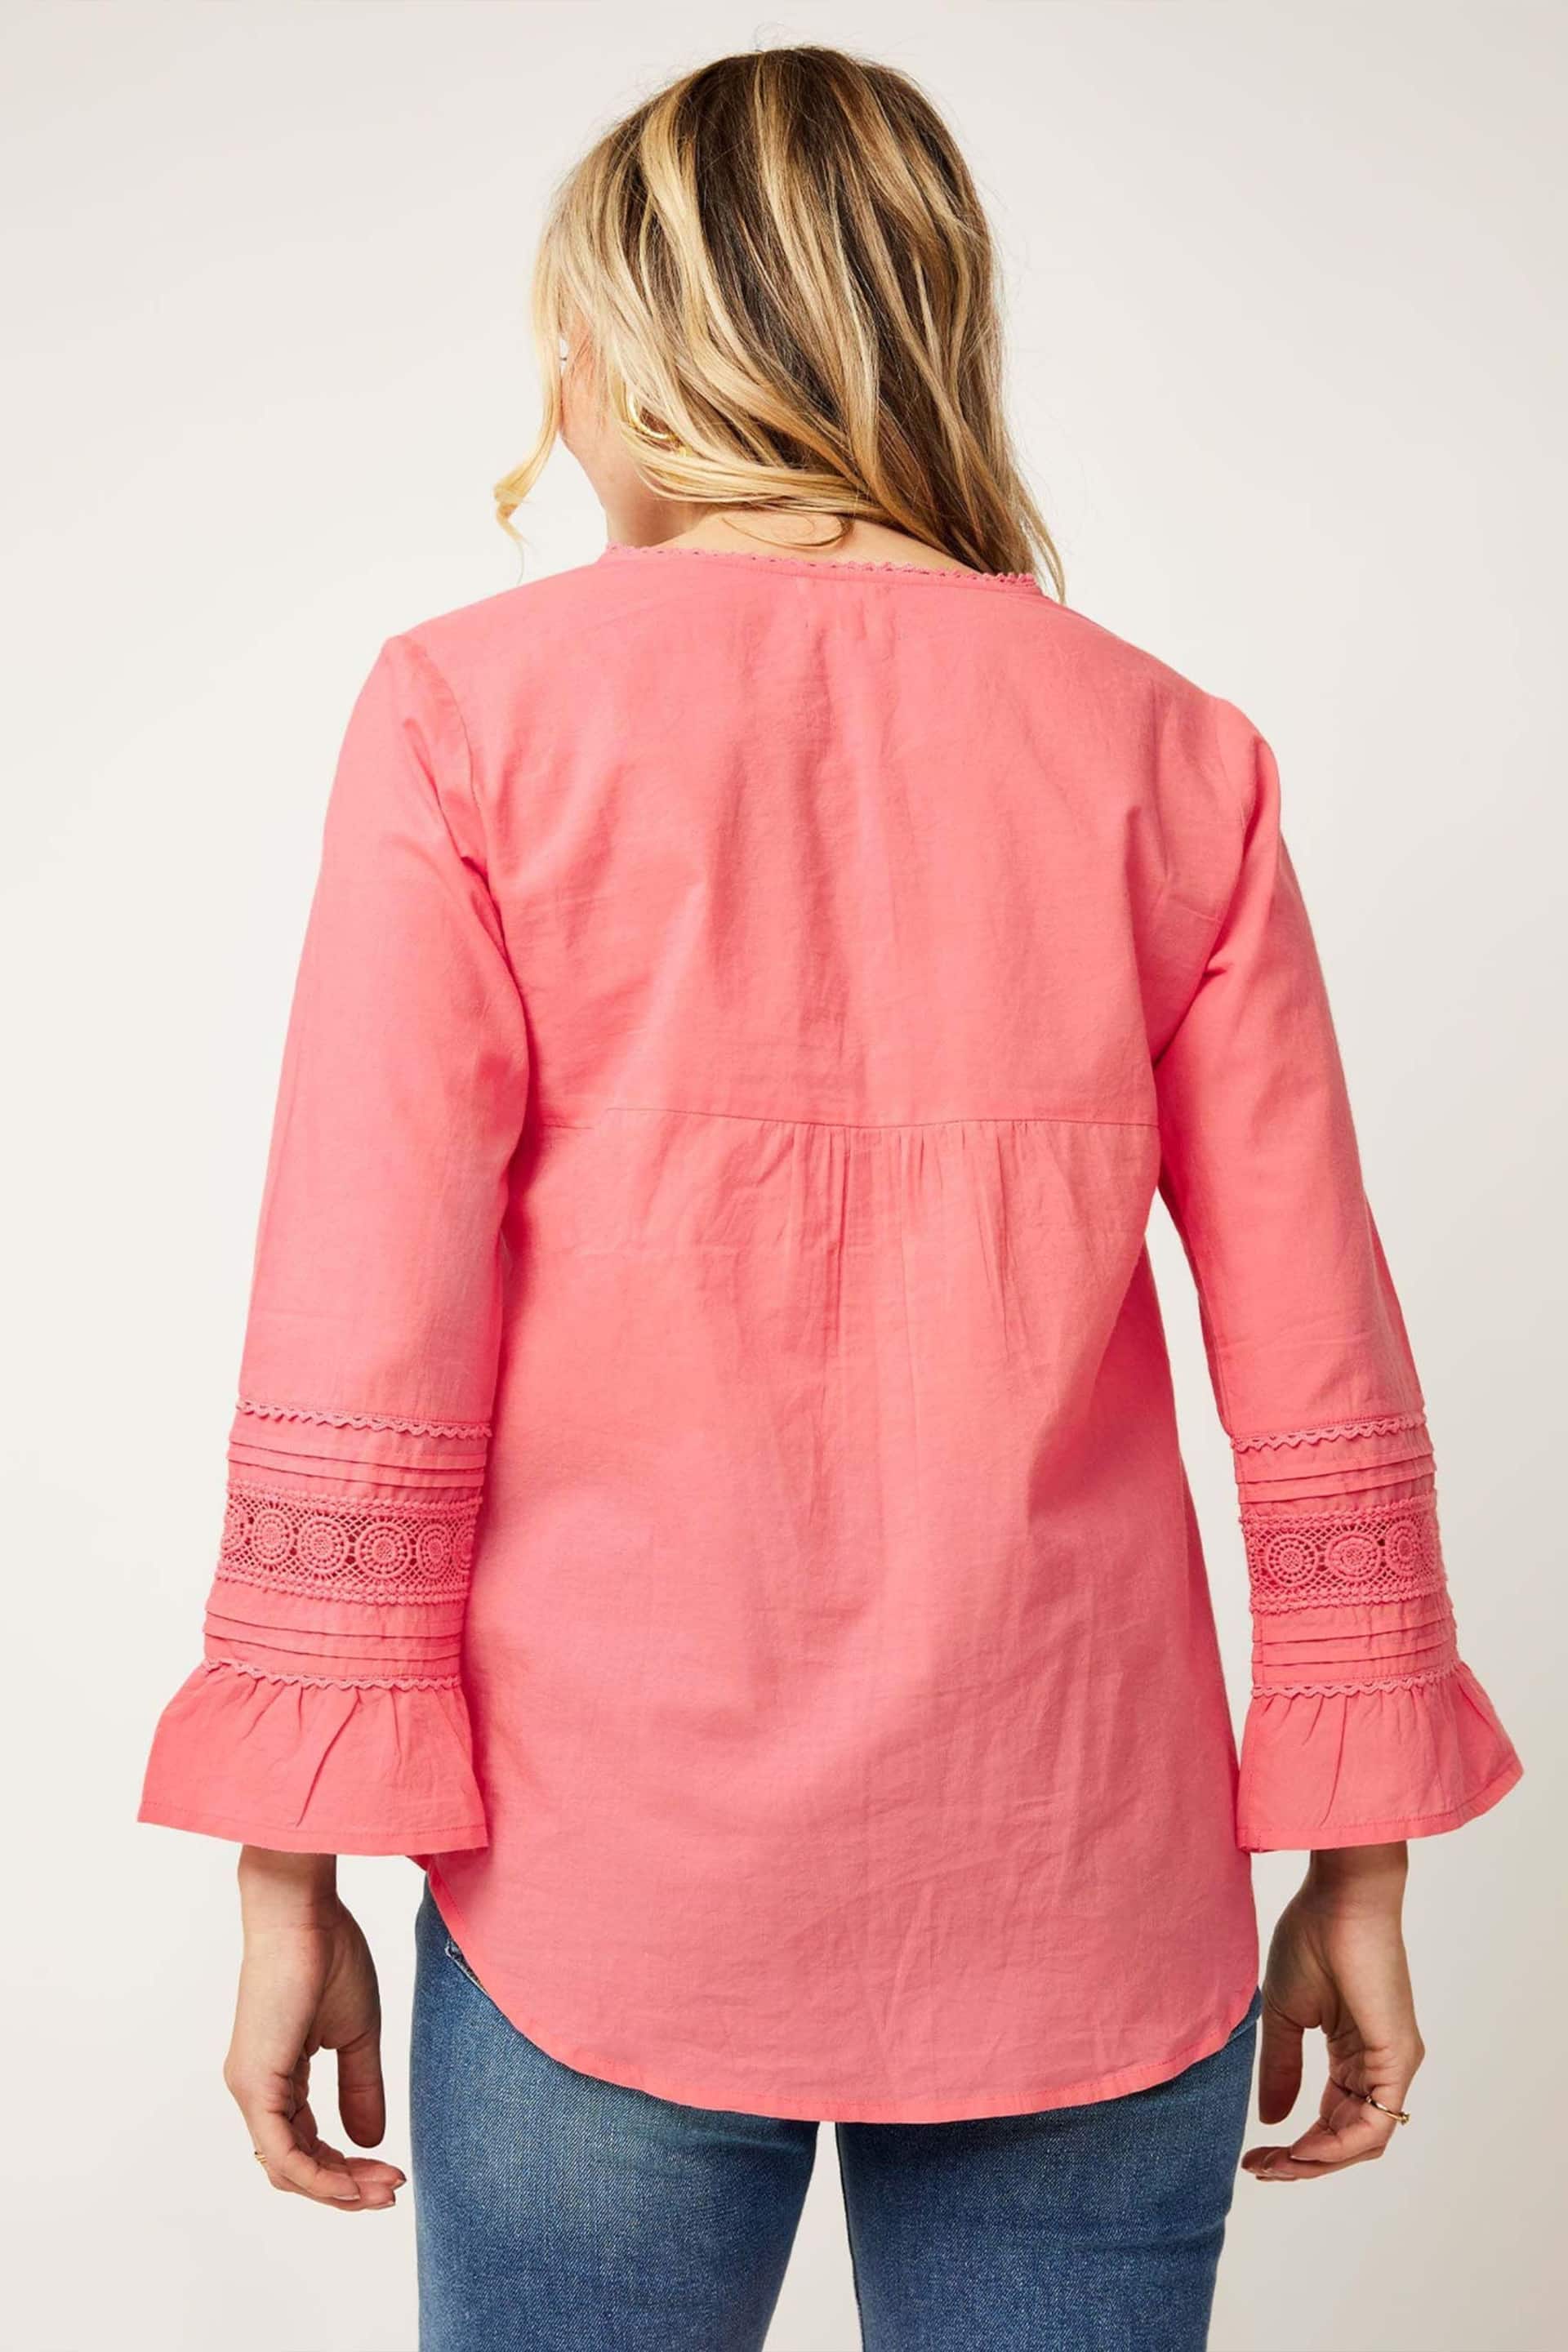 Aspiga Valentina Pink Embroidered Organic Cotton Blouse - Image 2 of 5